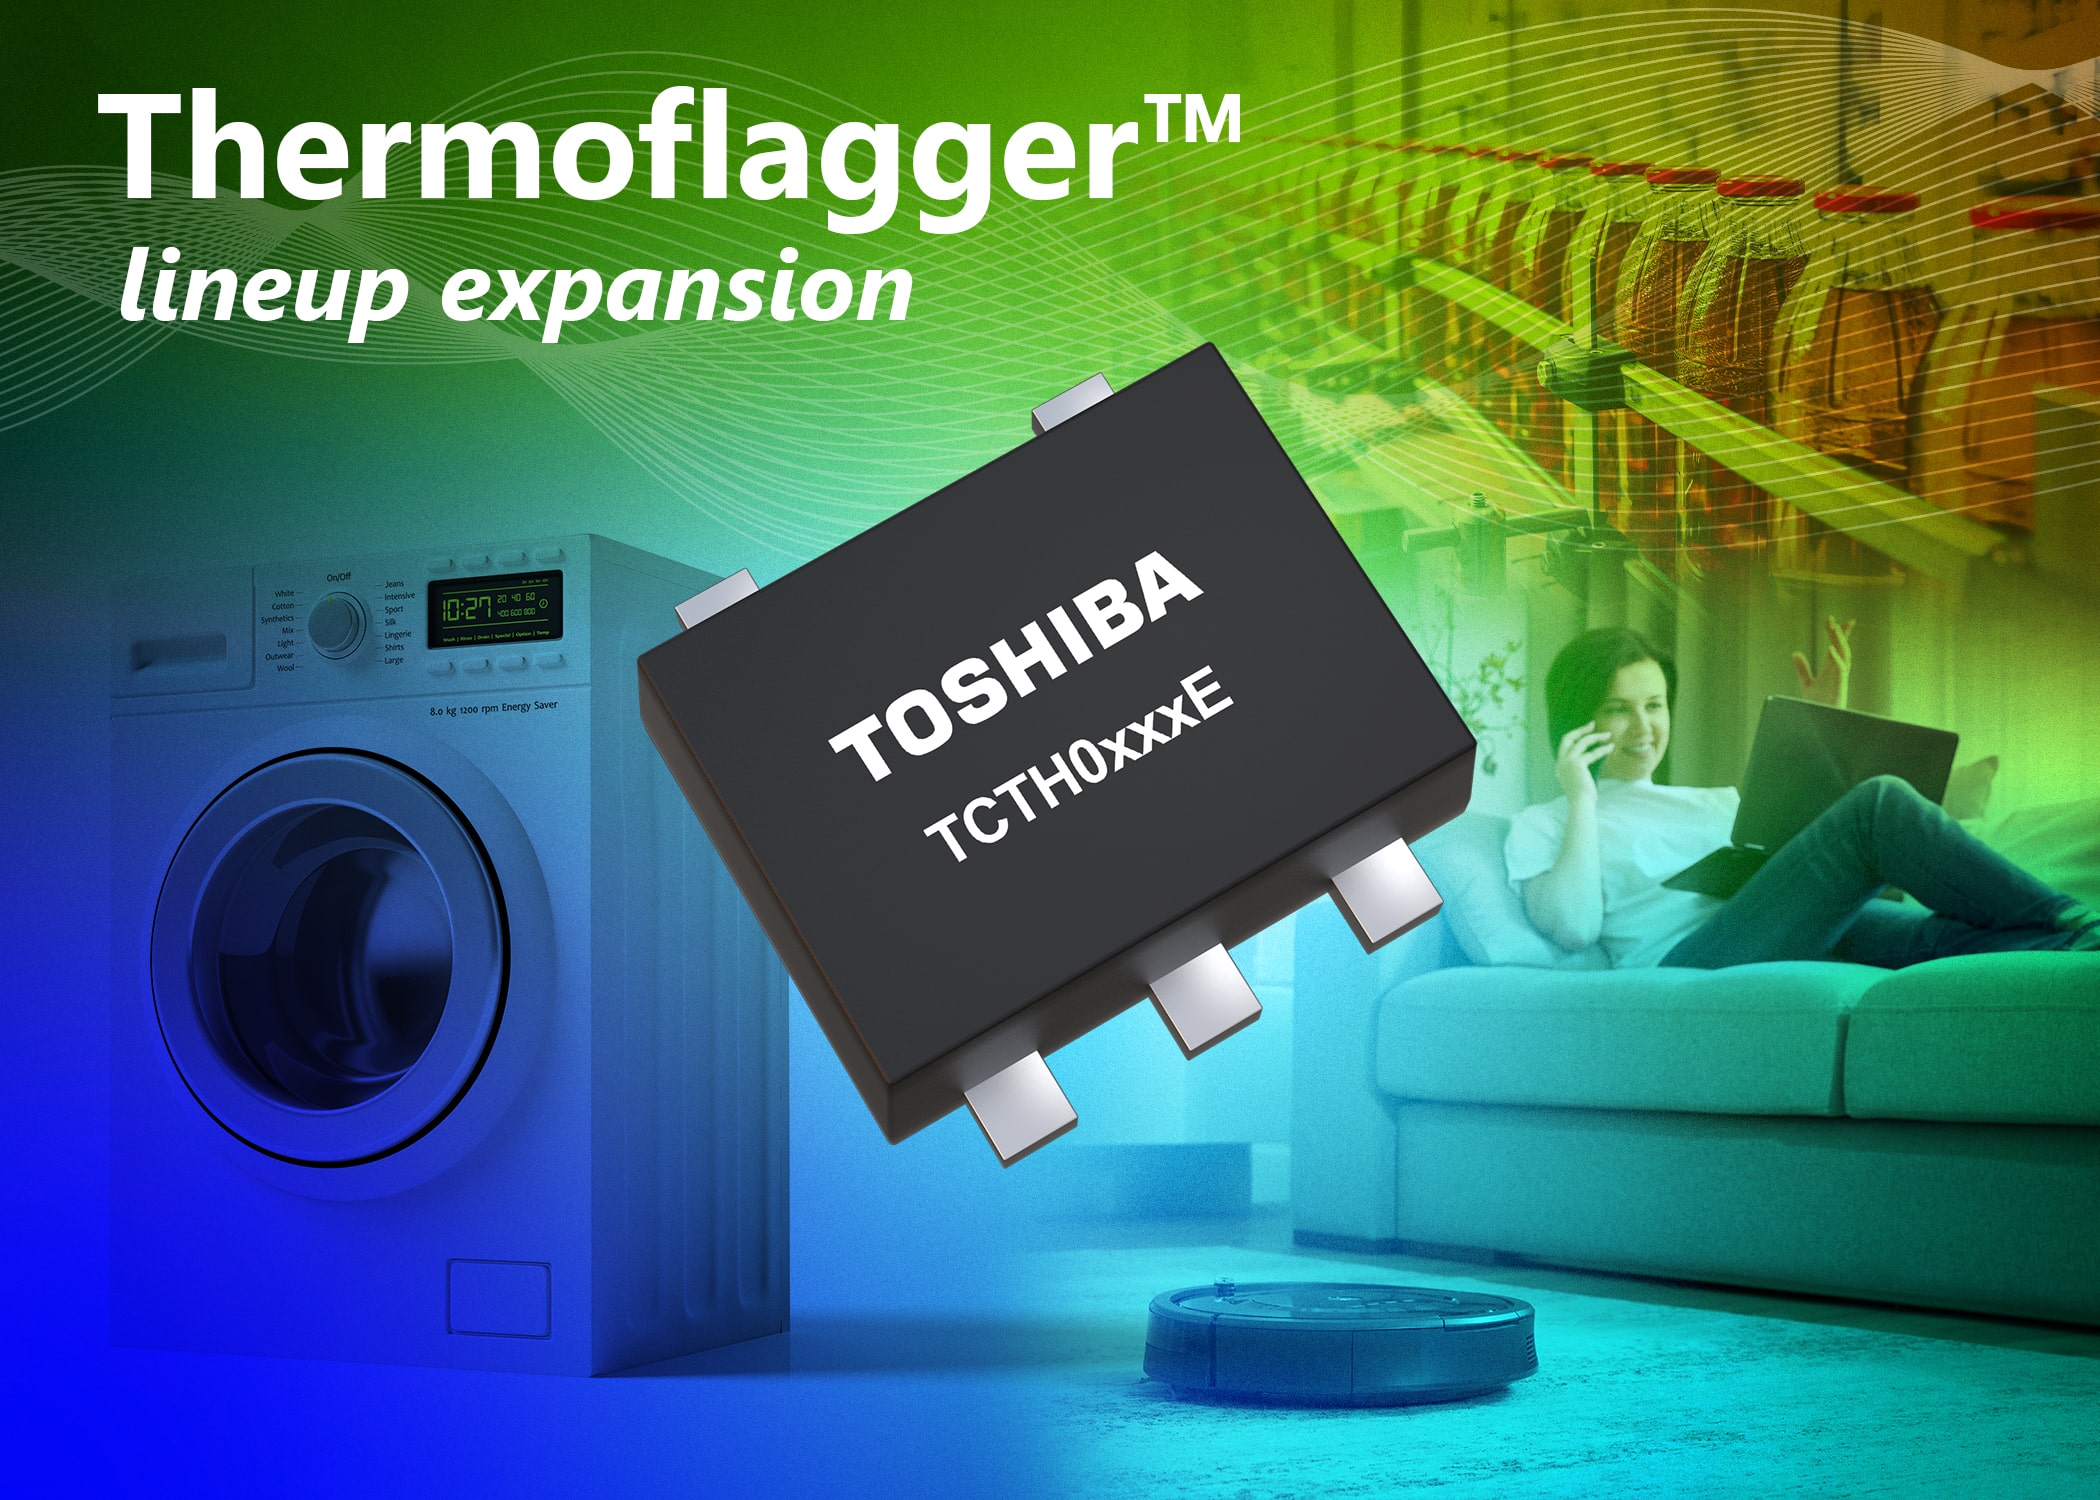 Toshiba expands range of Thermoflaggerâ„¢ temperature monitoring ICs